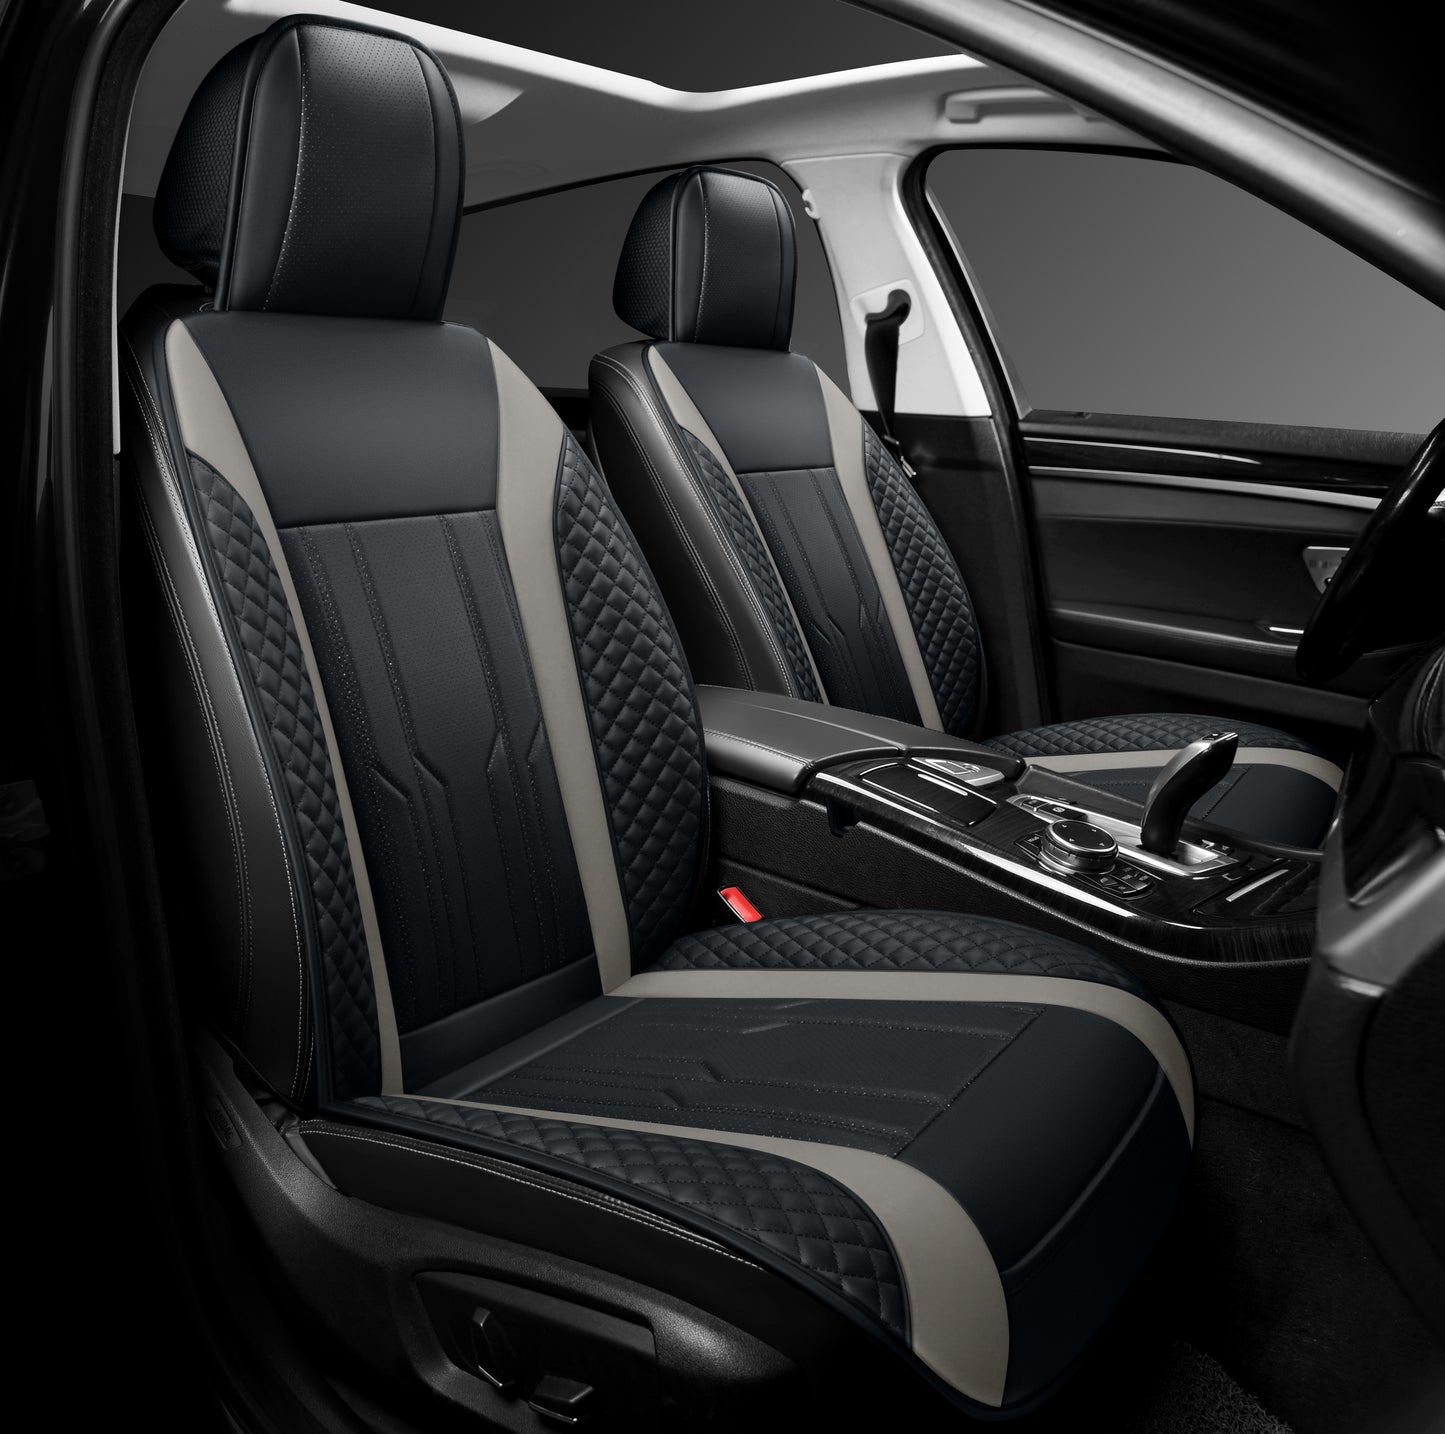 Premium Series Seat Cover - Front Seat Kit (2 Pack)